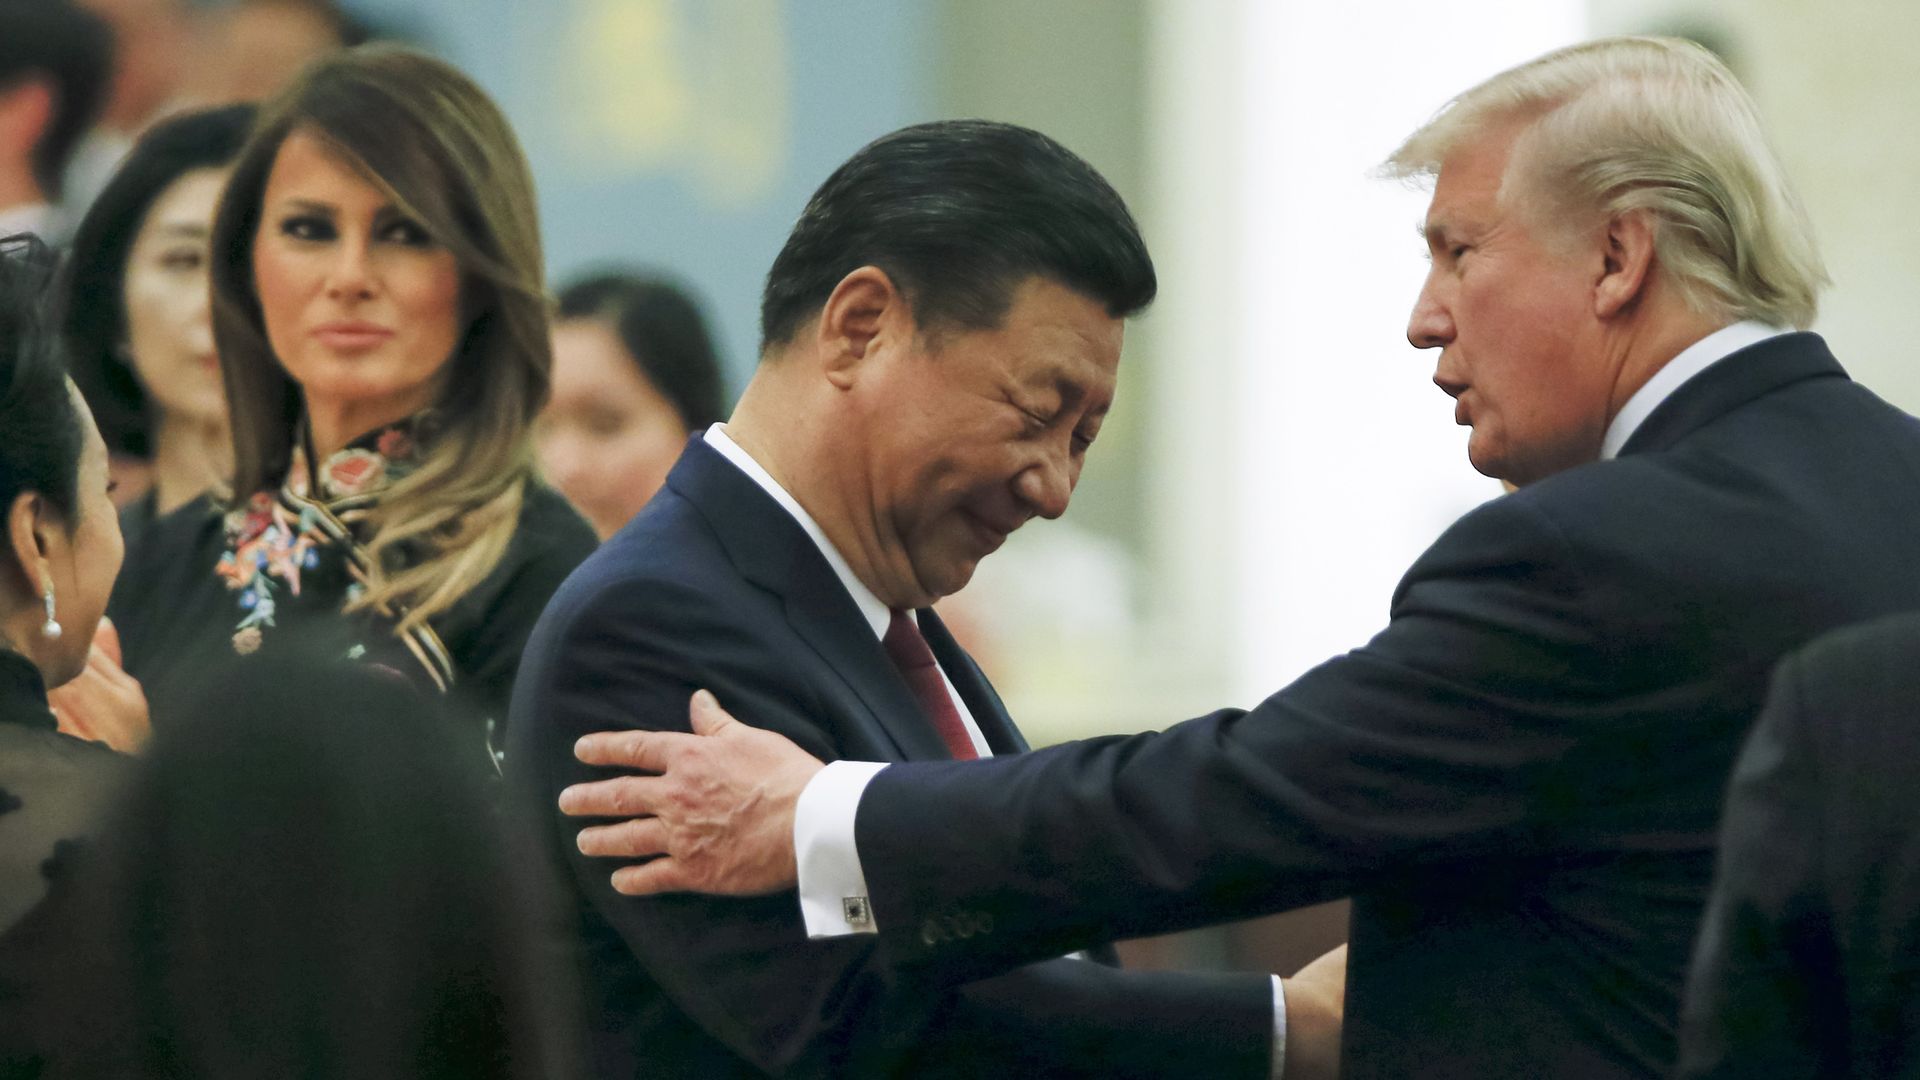 Donald Trump and Xi Jinping shake hands.